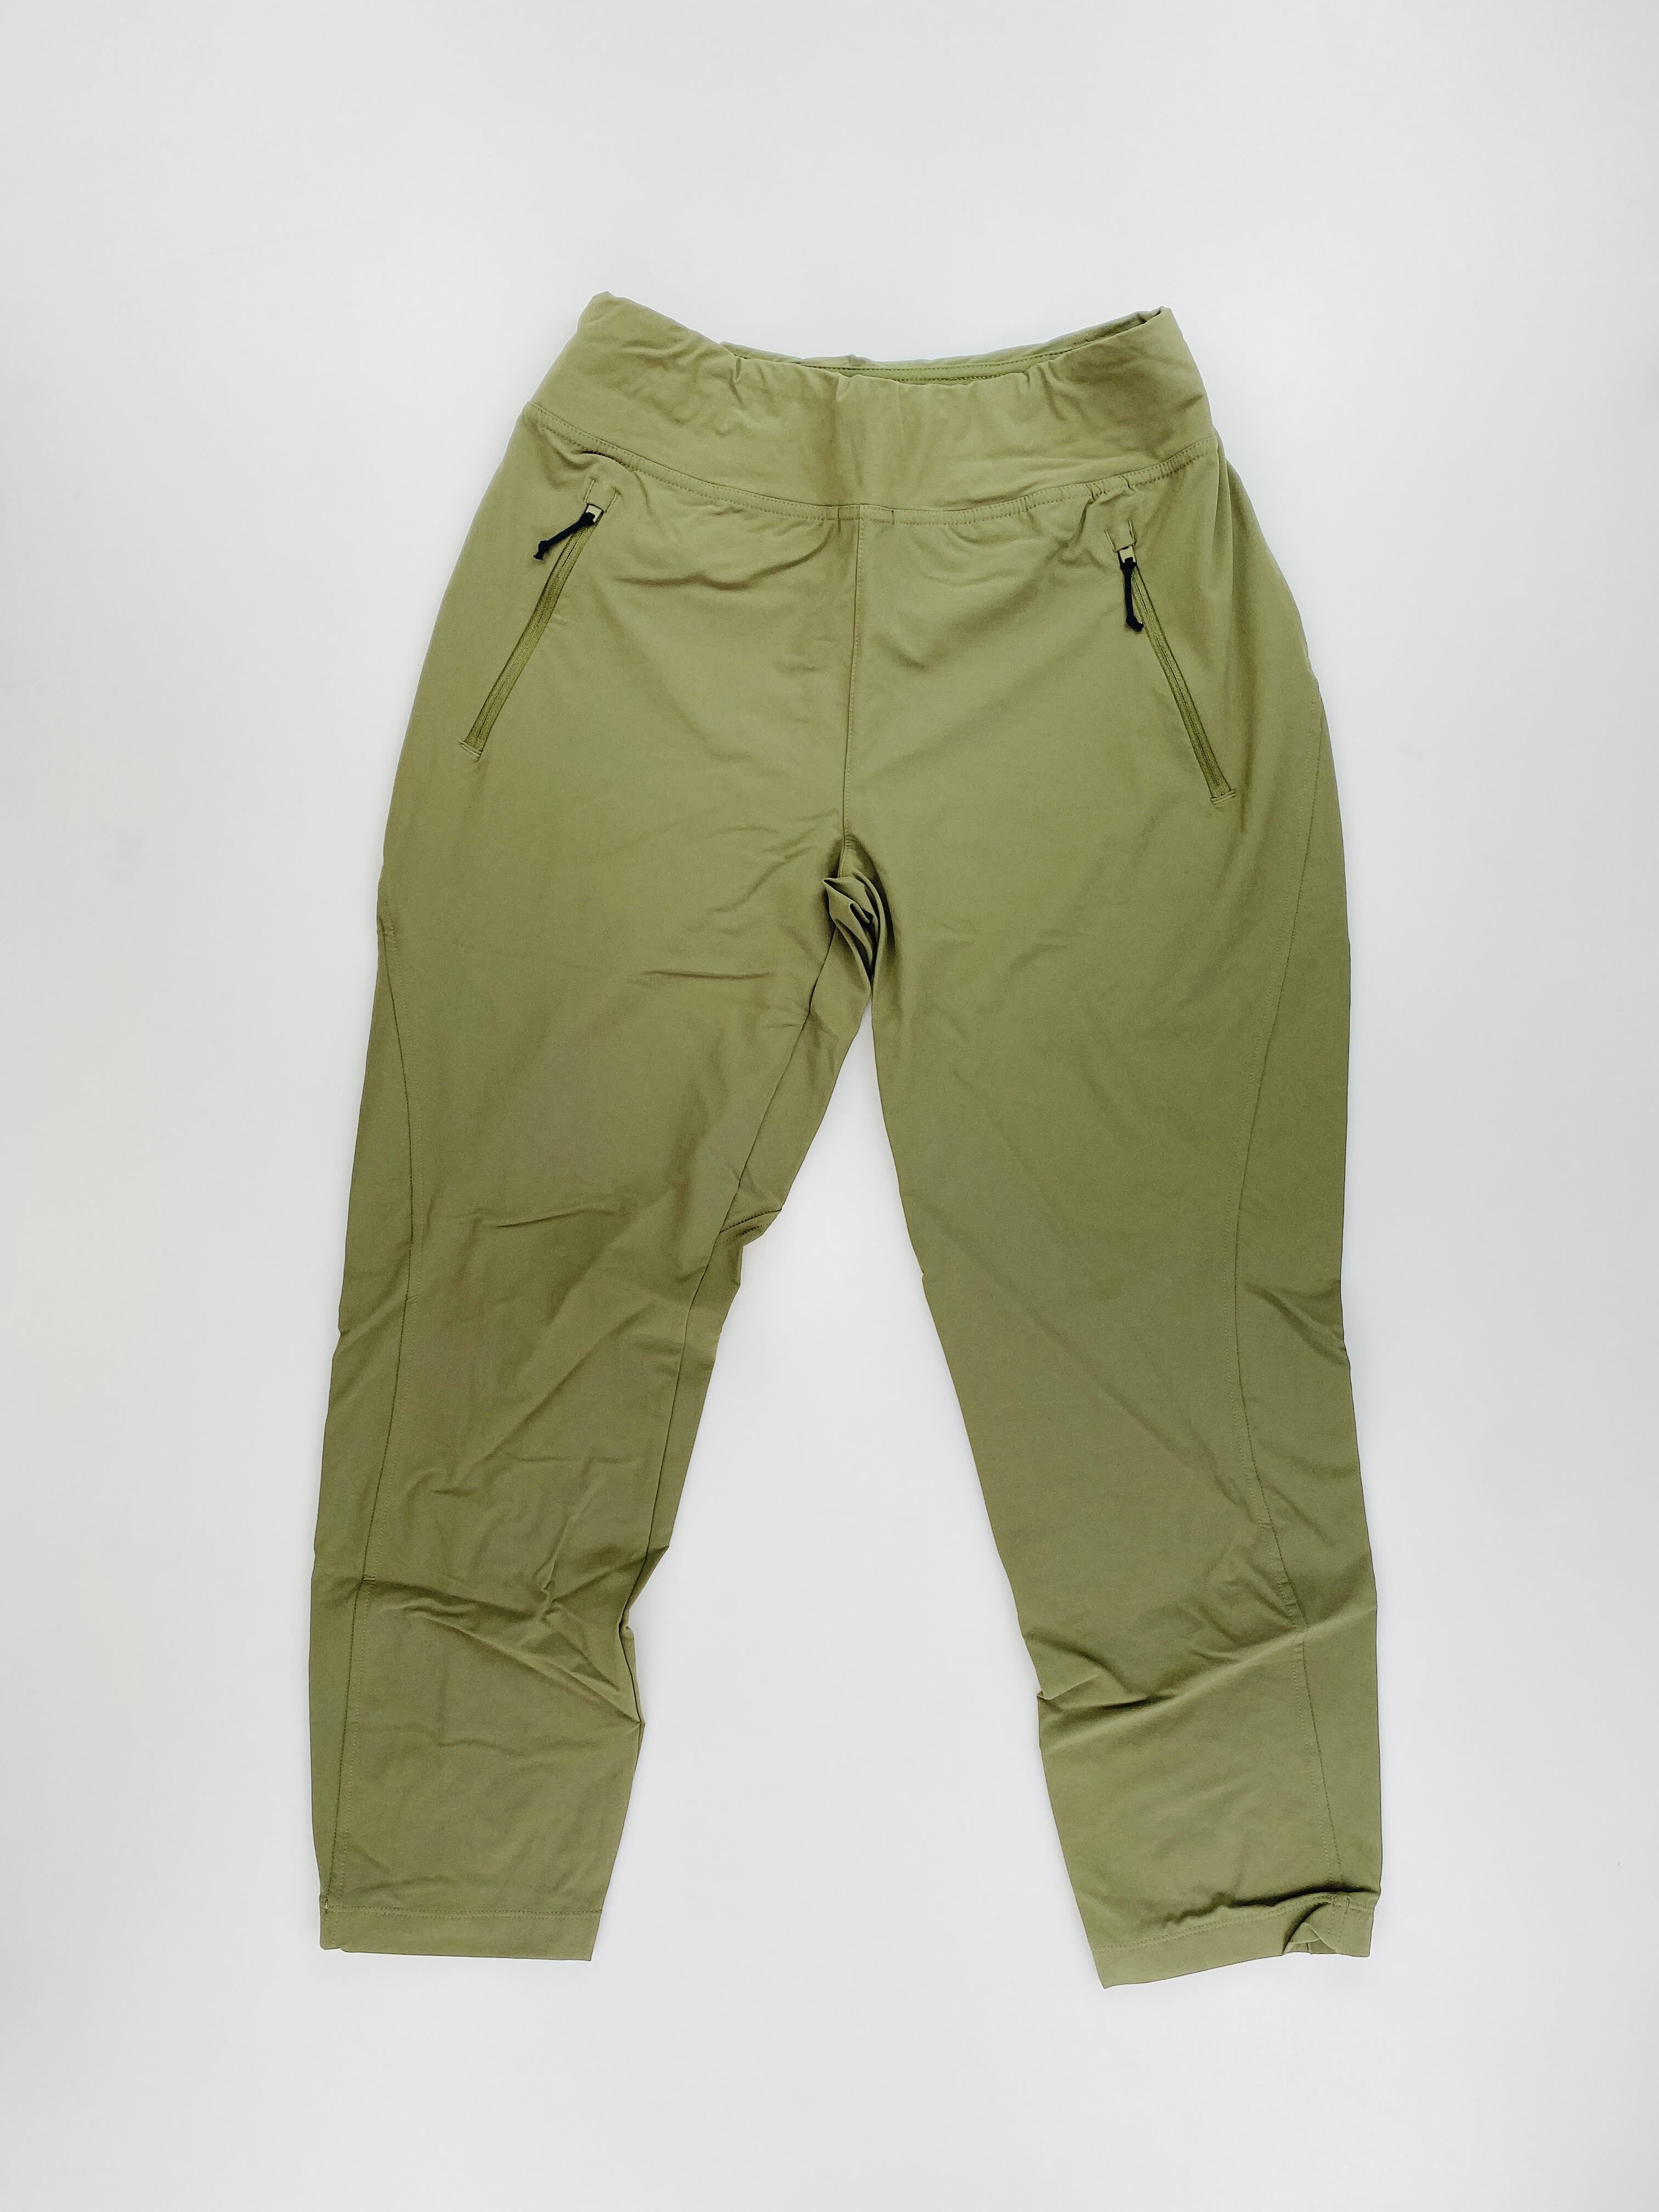 Mountain Hardwear Chockstone™ Women's Pull On Pant Regular - Seconde main Pantalon femme - Vert olive - S | Hardloop